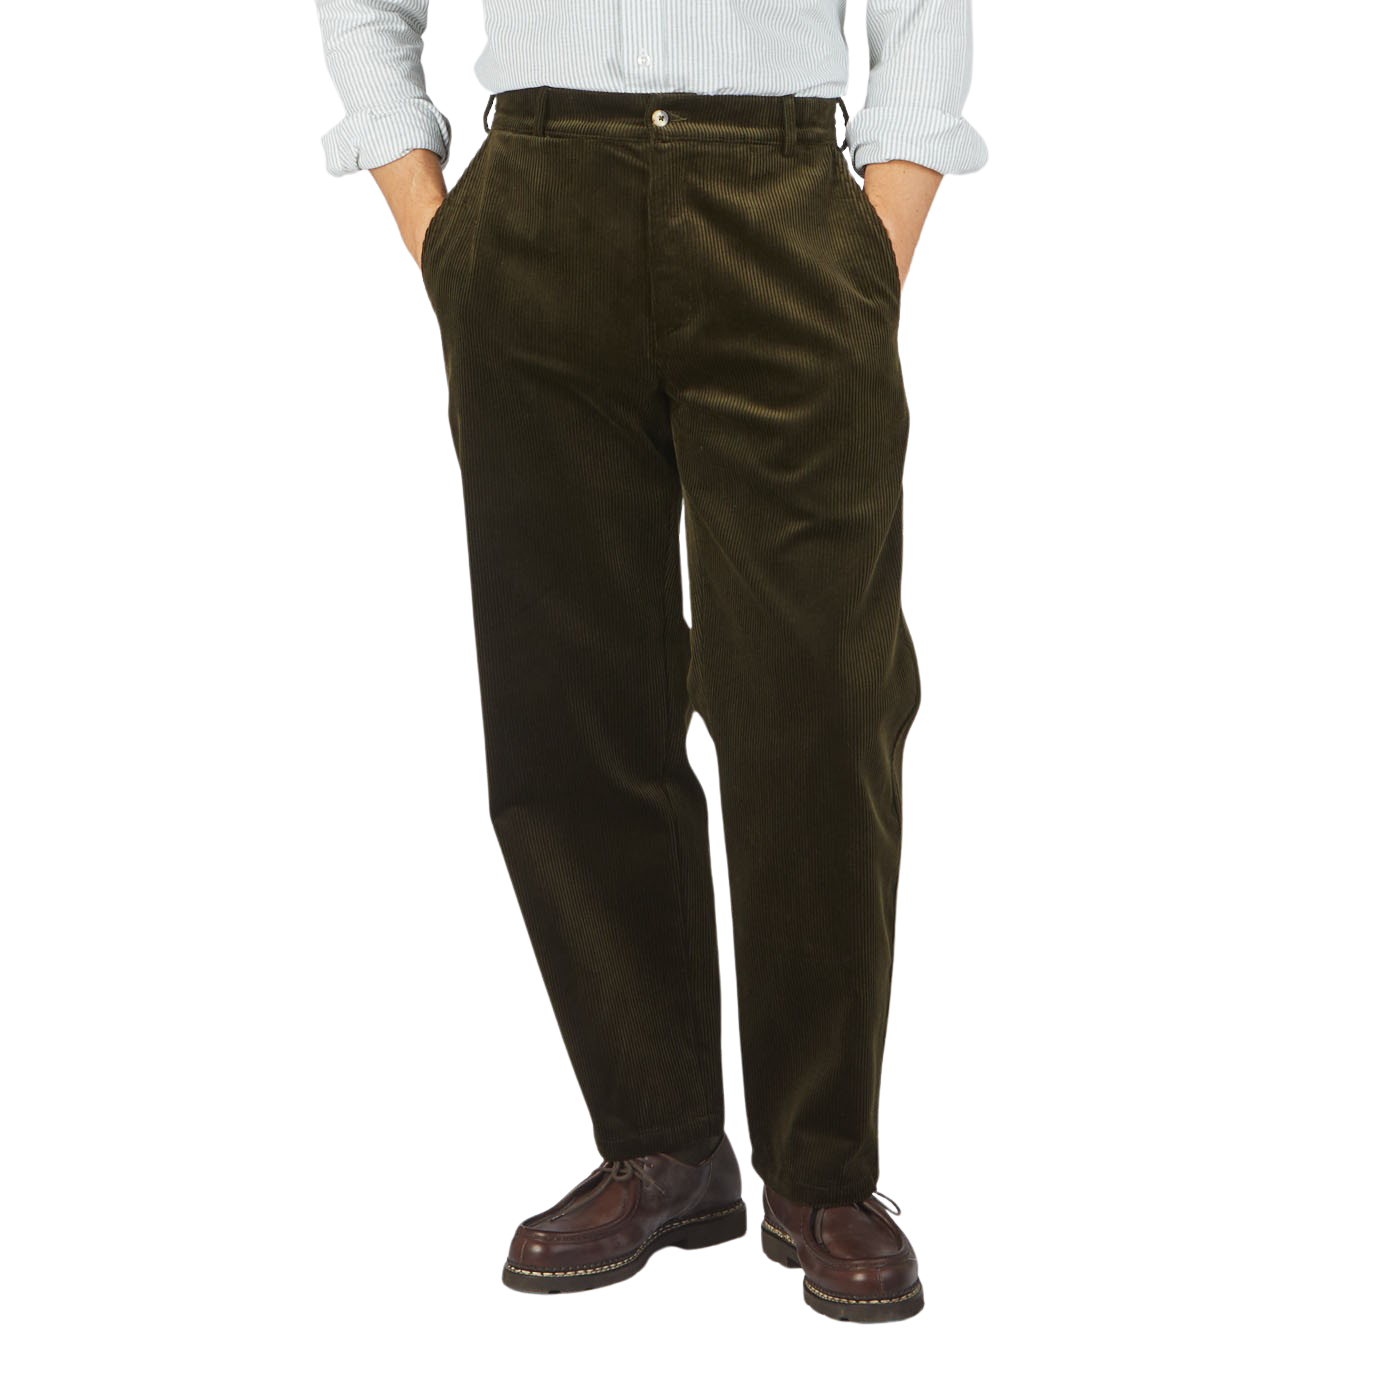 A man wearing De Bonne Facture Dark Olive Cotton Corduroy Balloon trousers and a white shirt.